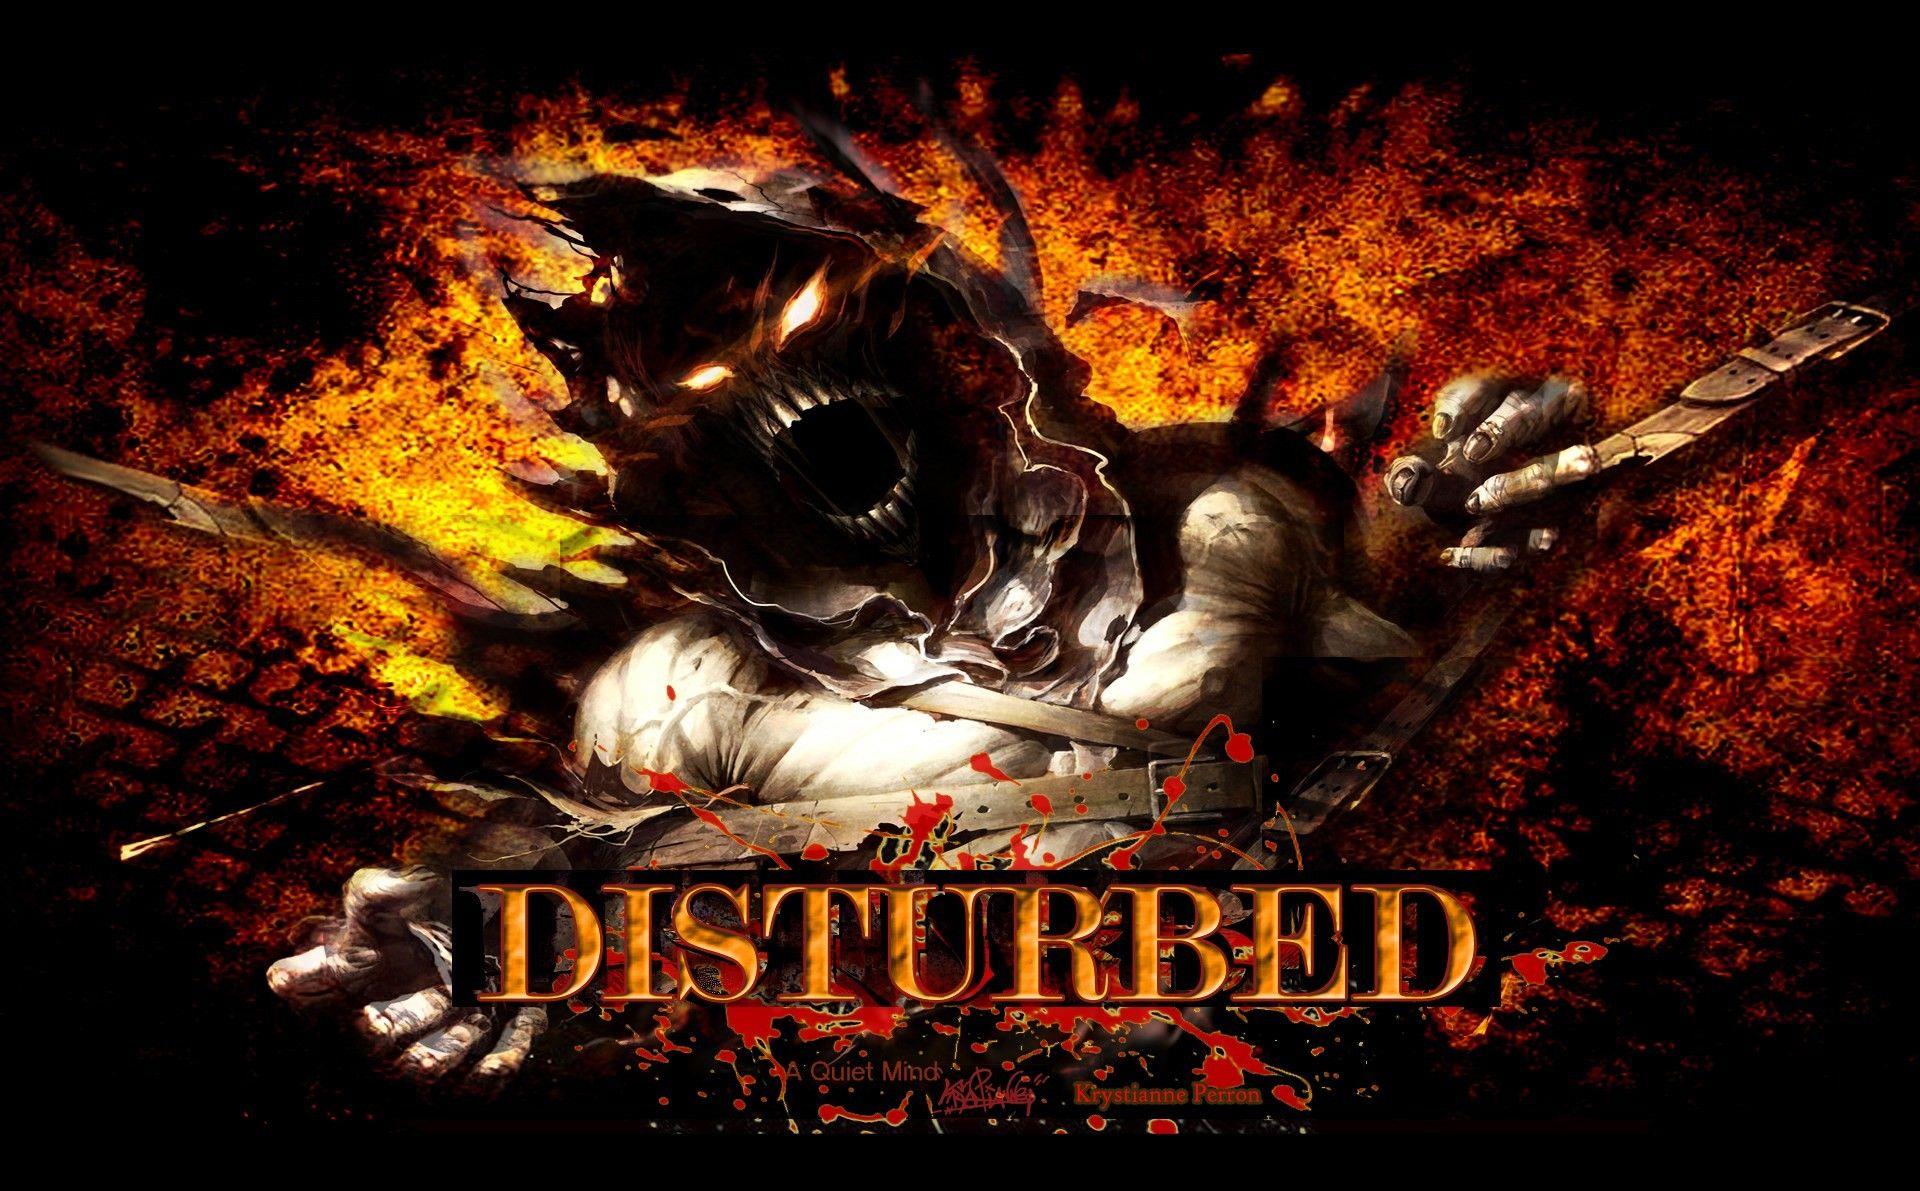 Disturbed Logo - Disturbed Logo Wallpaper For Android Festival Wallpaper